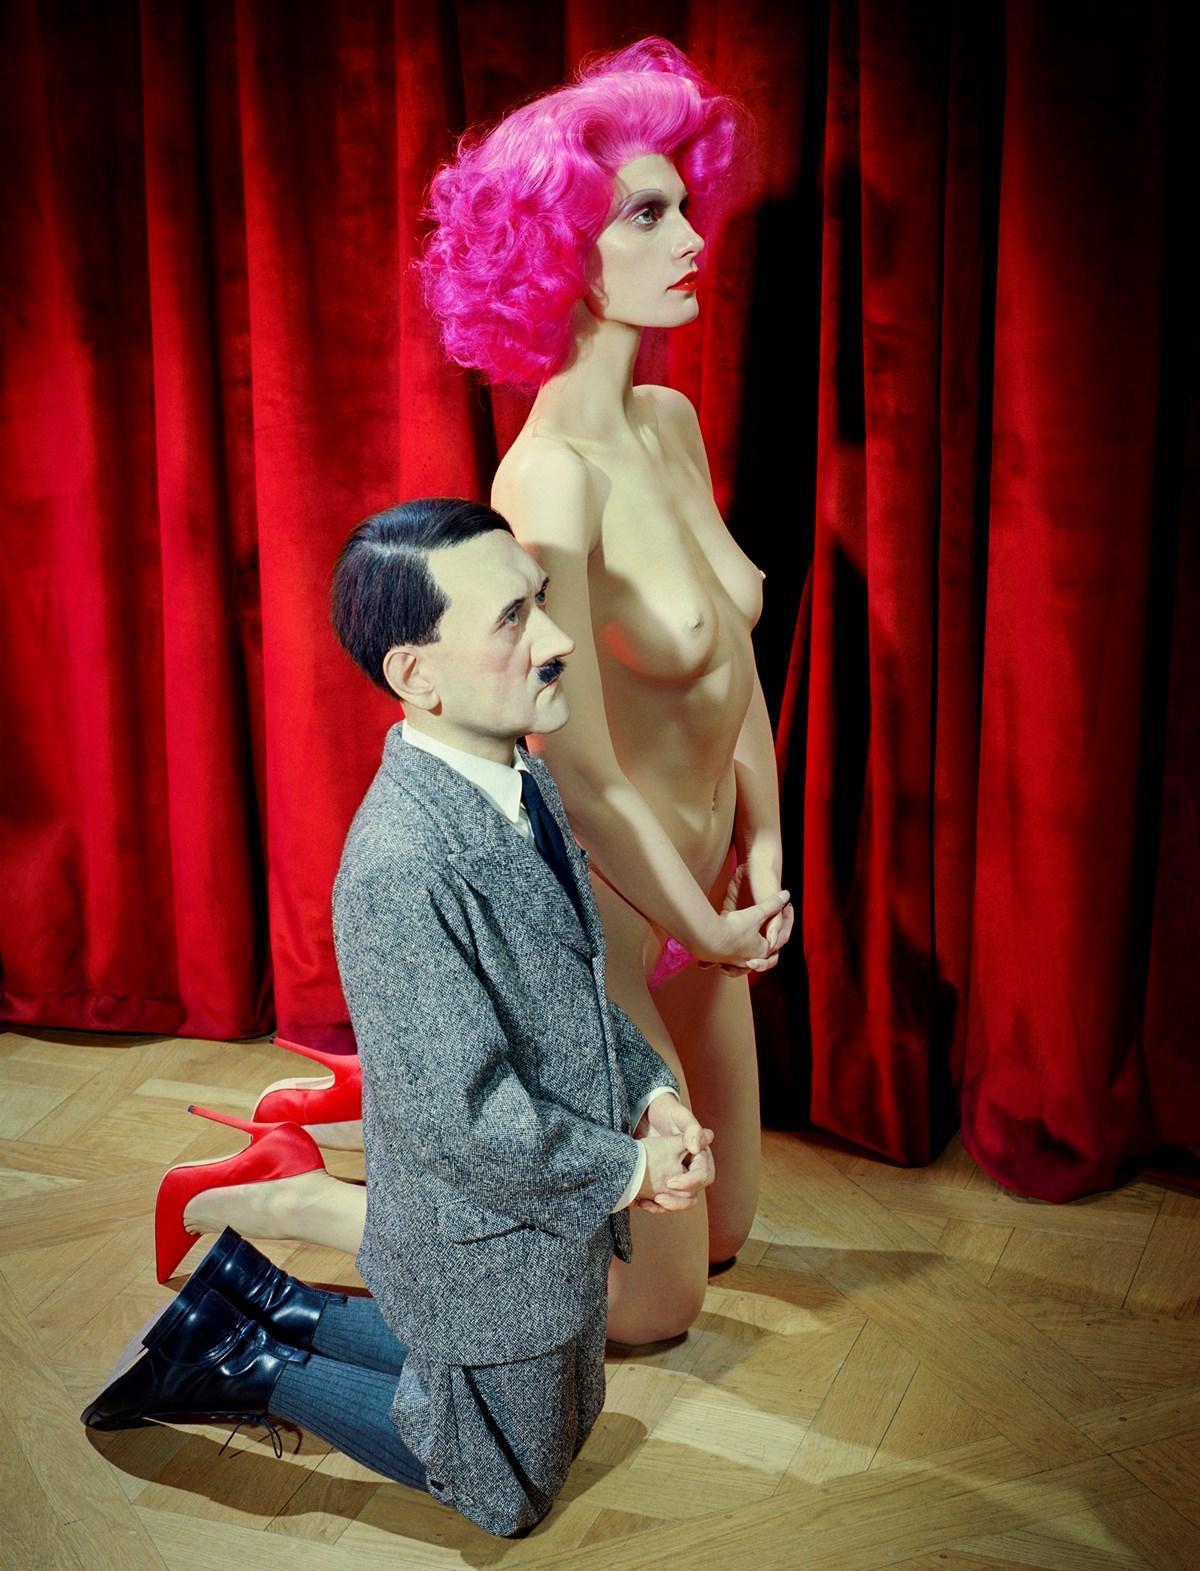 Him (after Cattelan) – Miles Aldridge, Woman, Fashion, Erotic, Nude, Colour, Art